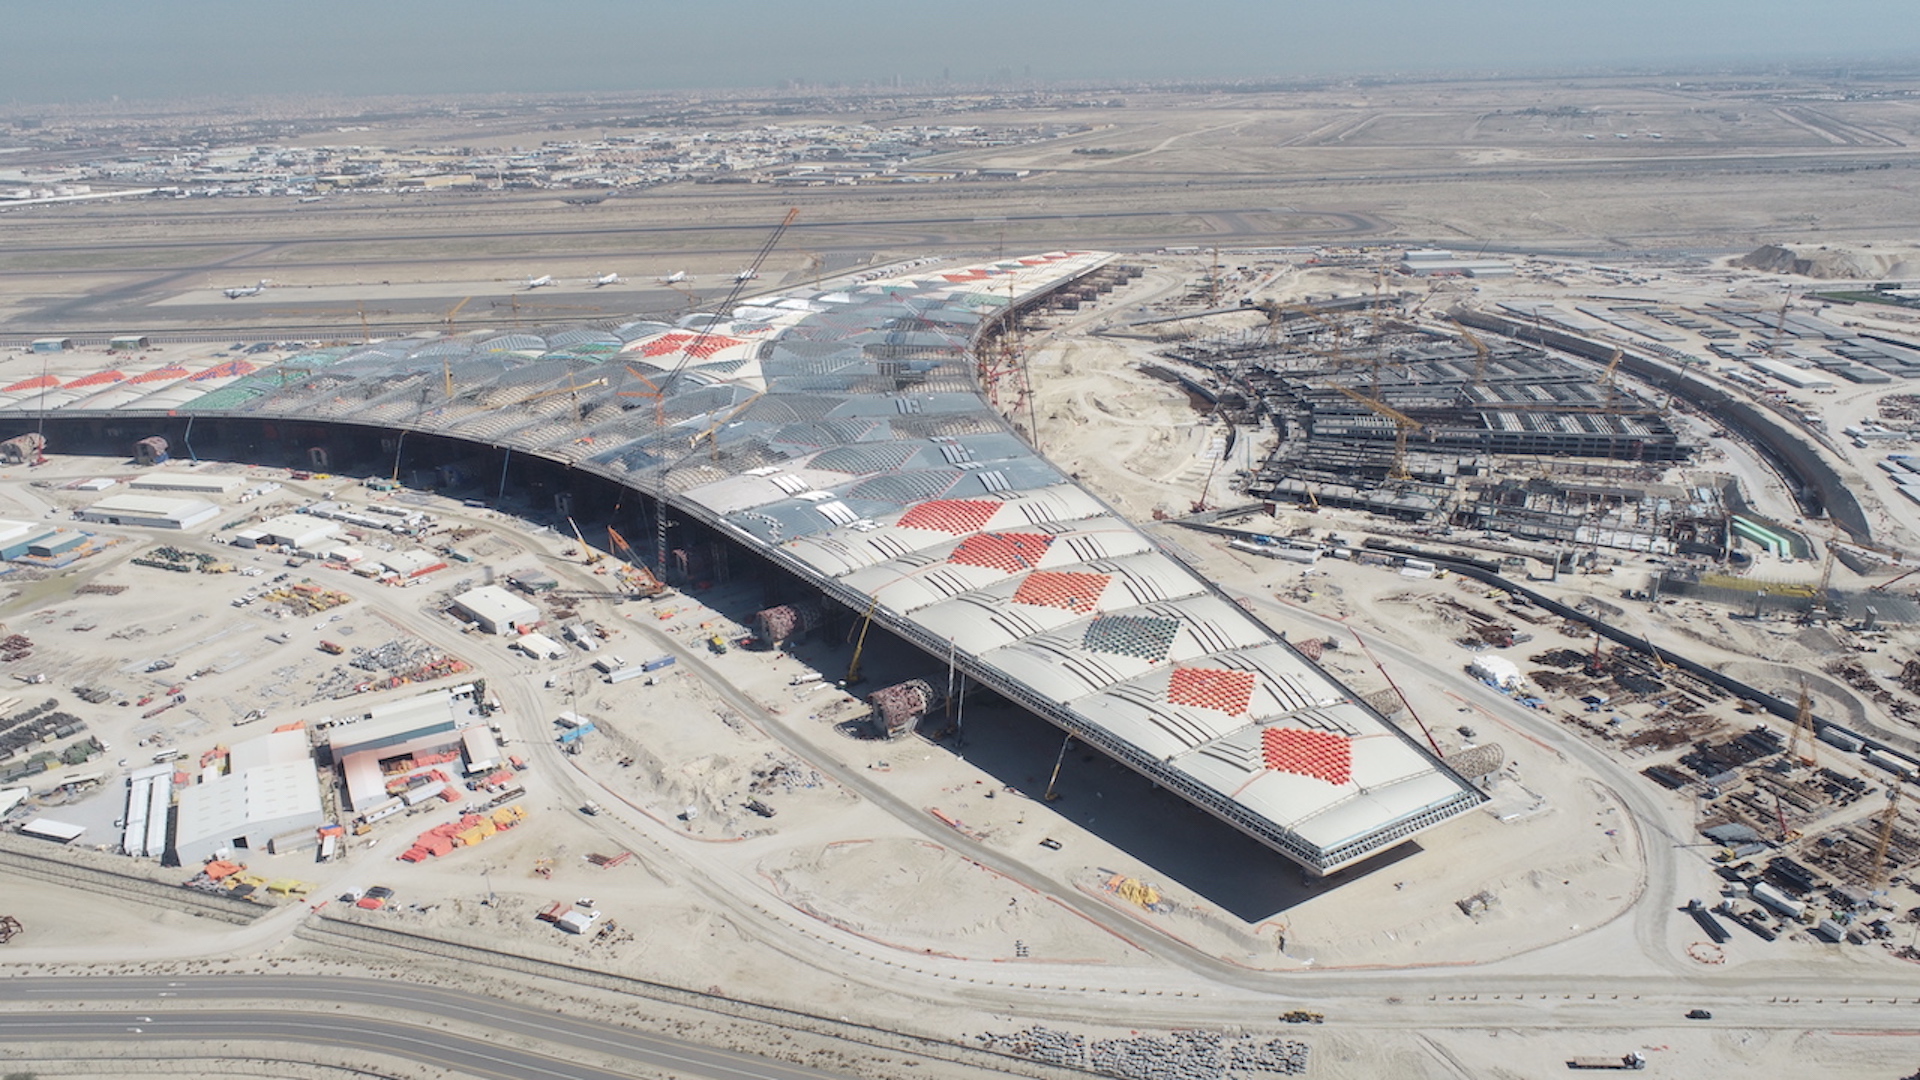 Shaikh Saad Al-Abdullah Airport Project